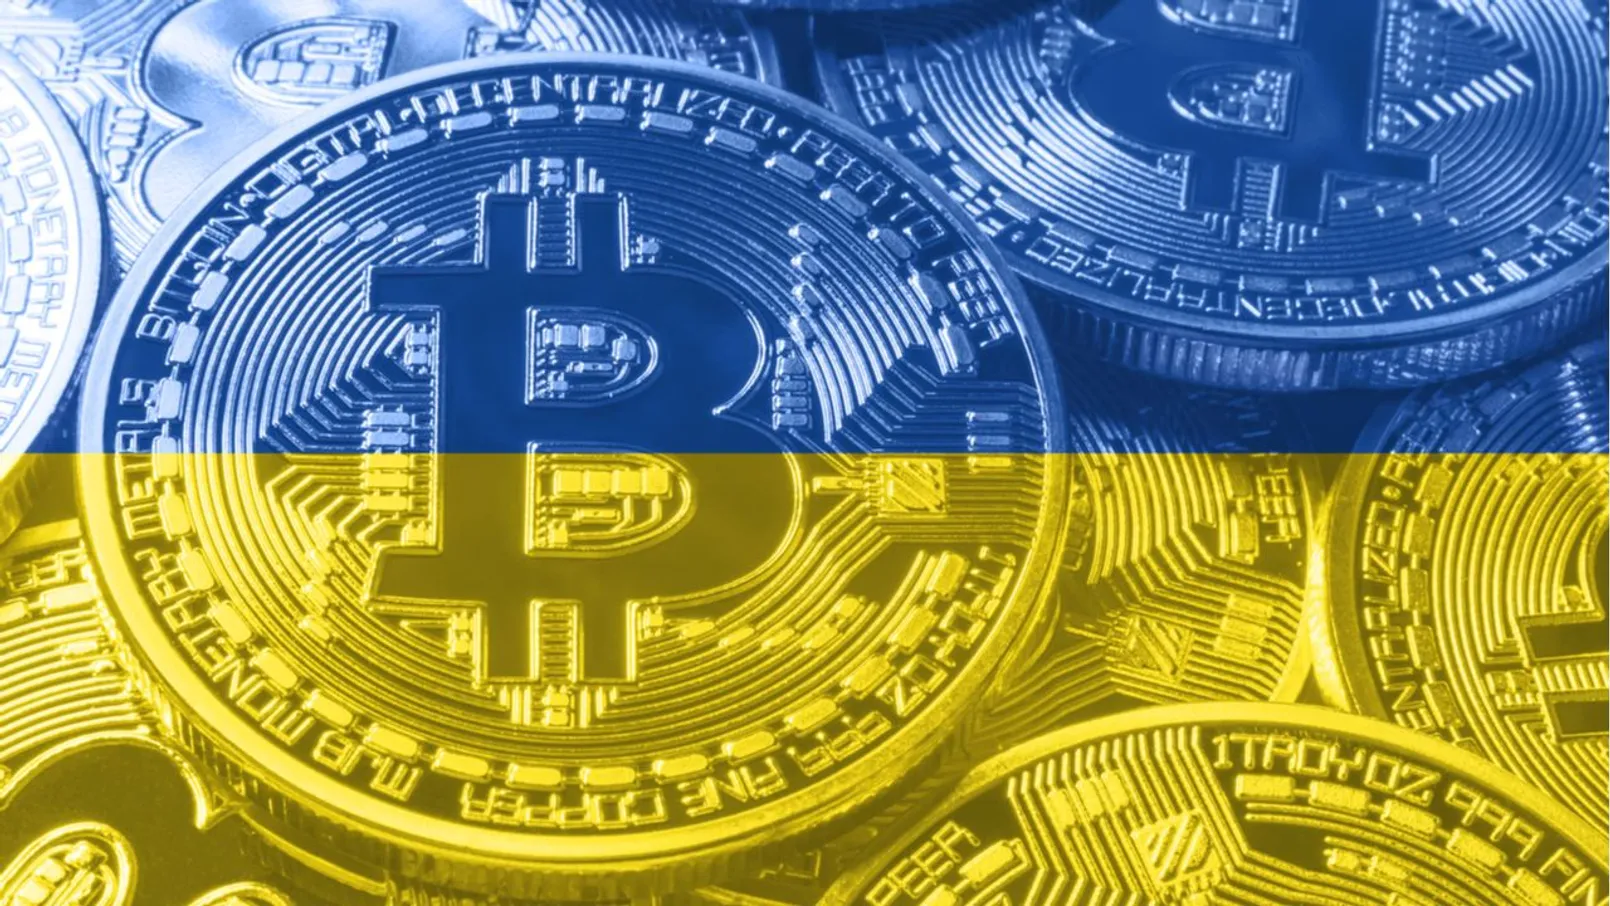 Pn P10bq Q Ukrainian Officials Hold Over 2 66 Billion Worth in Bitcoin Report Shows.jpeg.jpg